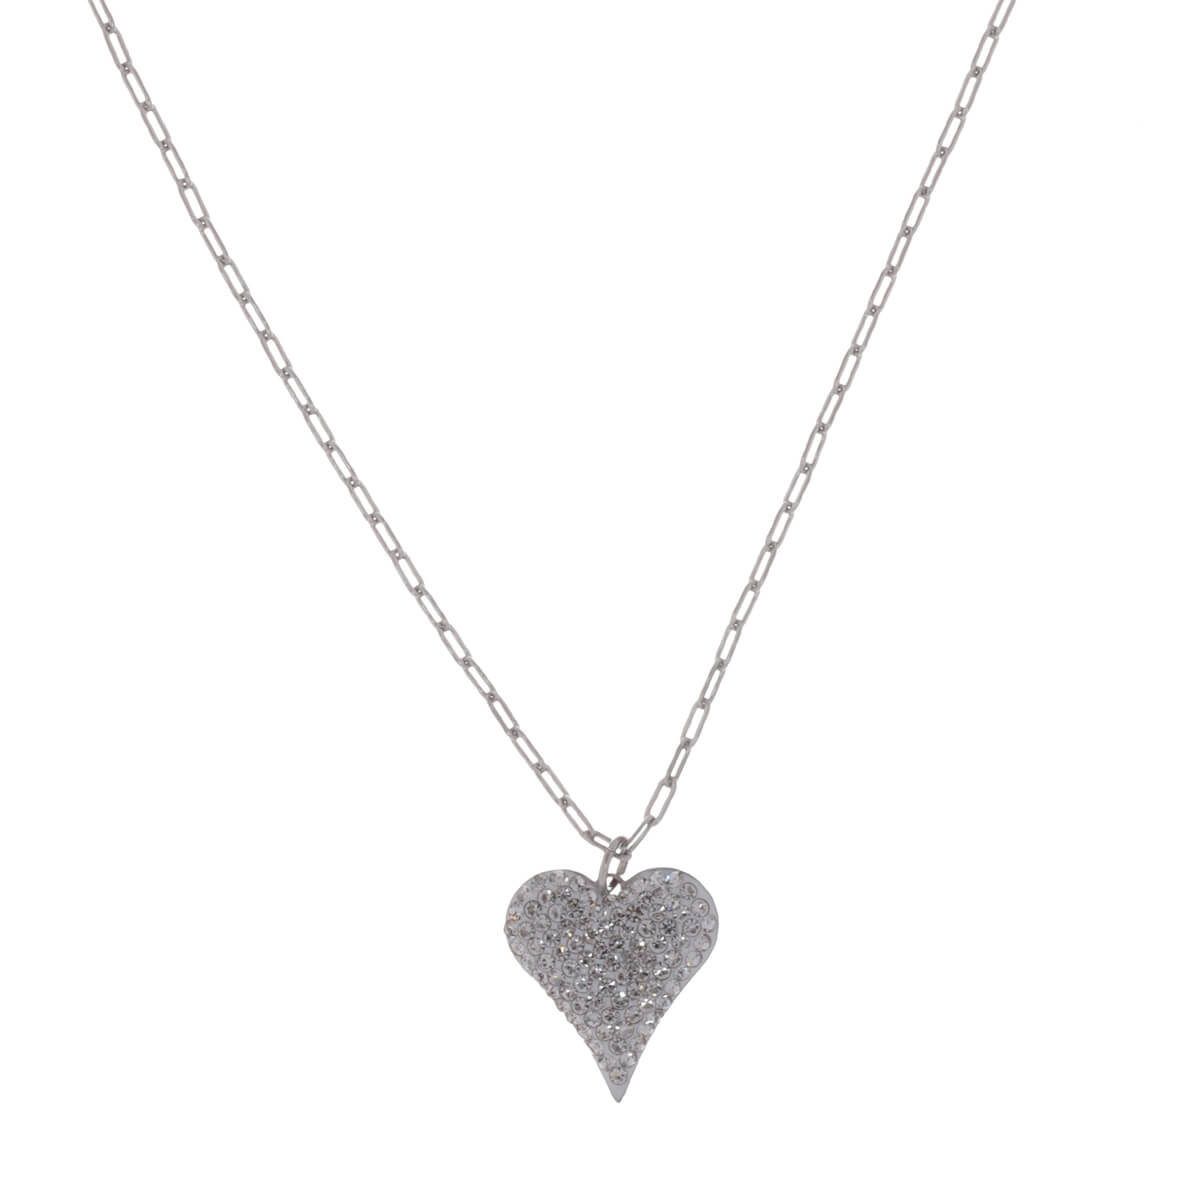 Sparkling heart pendant necklace (Steel 316L)